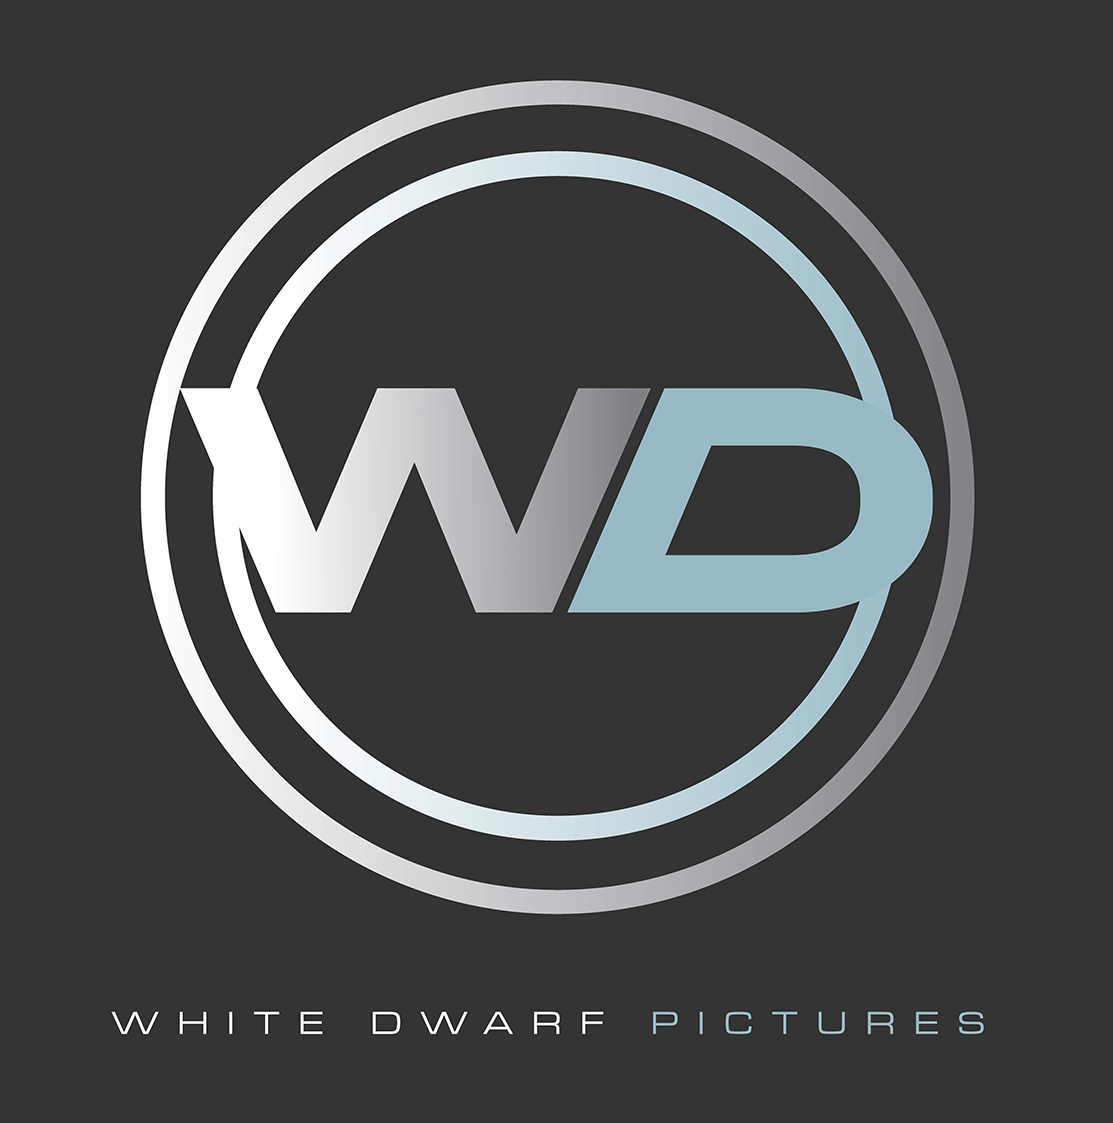 White dwarf picture logo